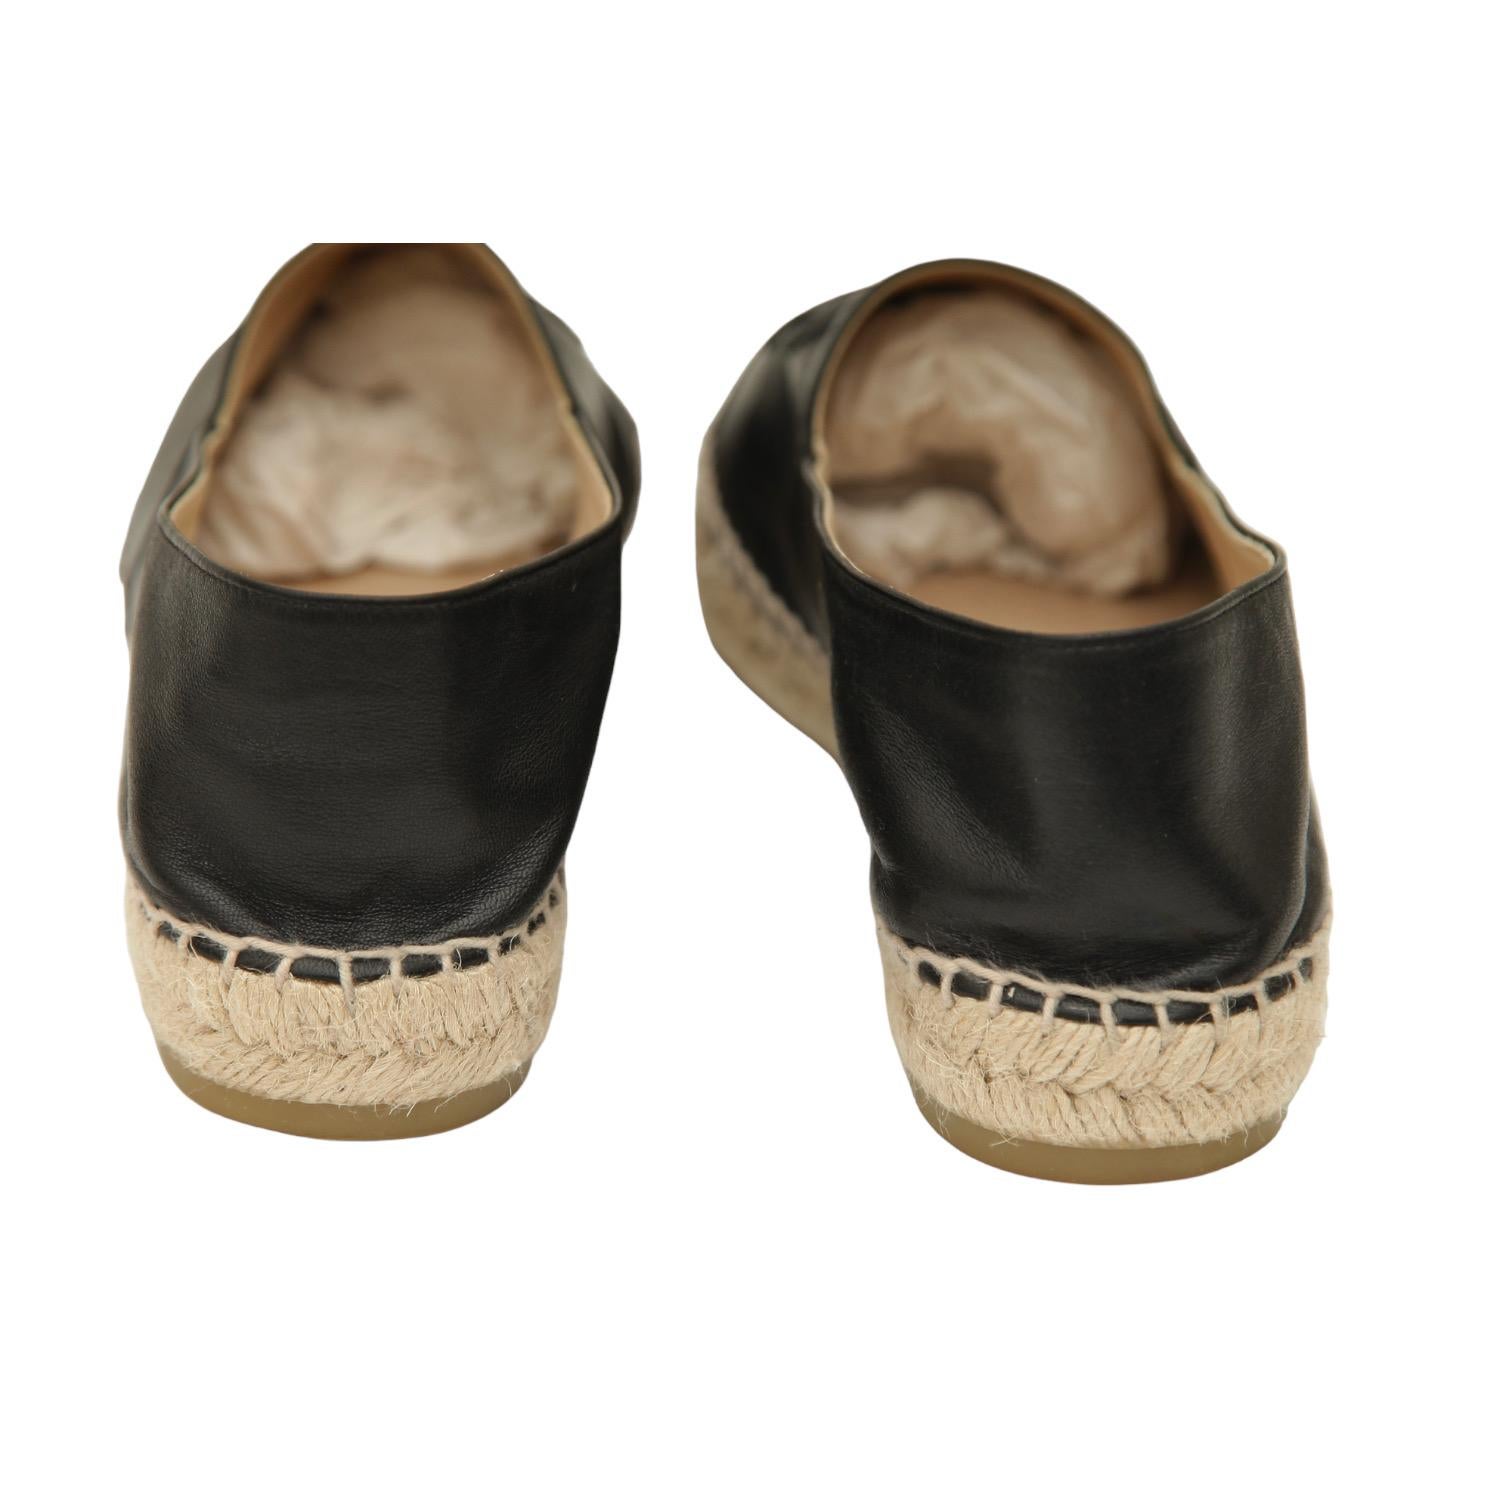 CHANEL Black Lambskin Leather Espadrilles Loafers Flats Cap Toe CC Shoes Sz 40 5